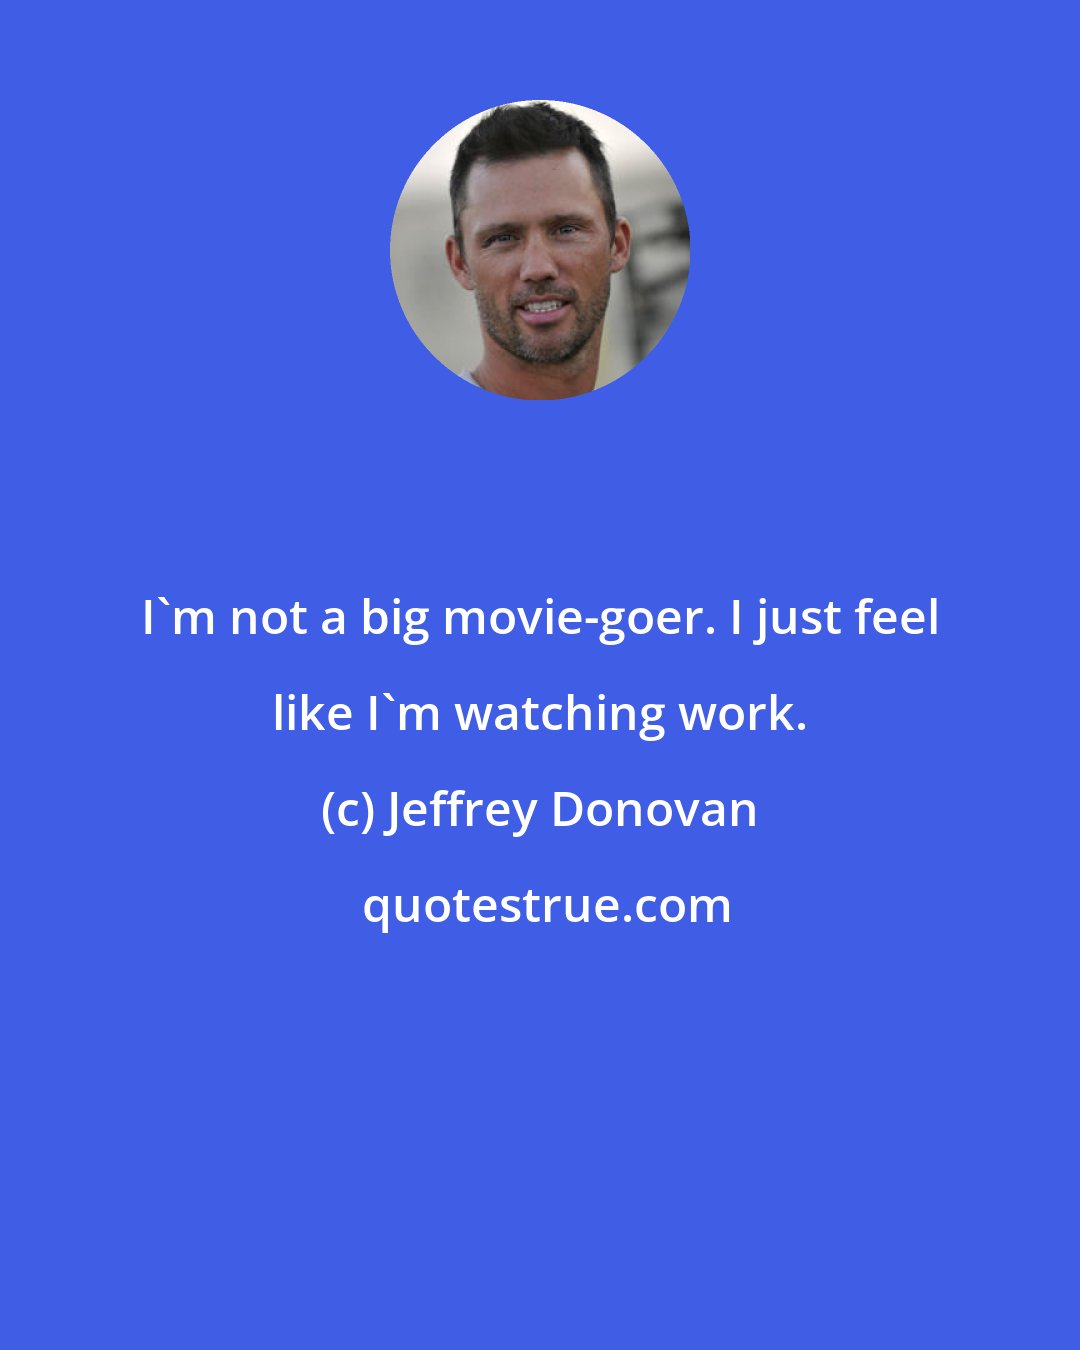 Jeffrey Donovan: I'm not a big movie-goer. I just feel like I'm watching work.